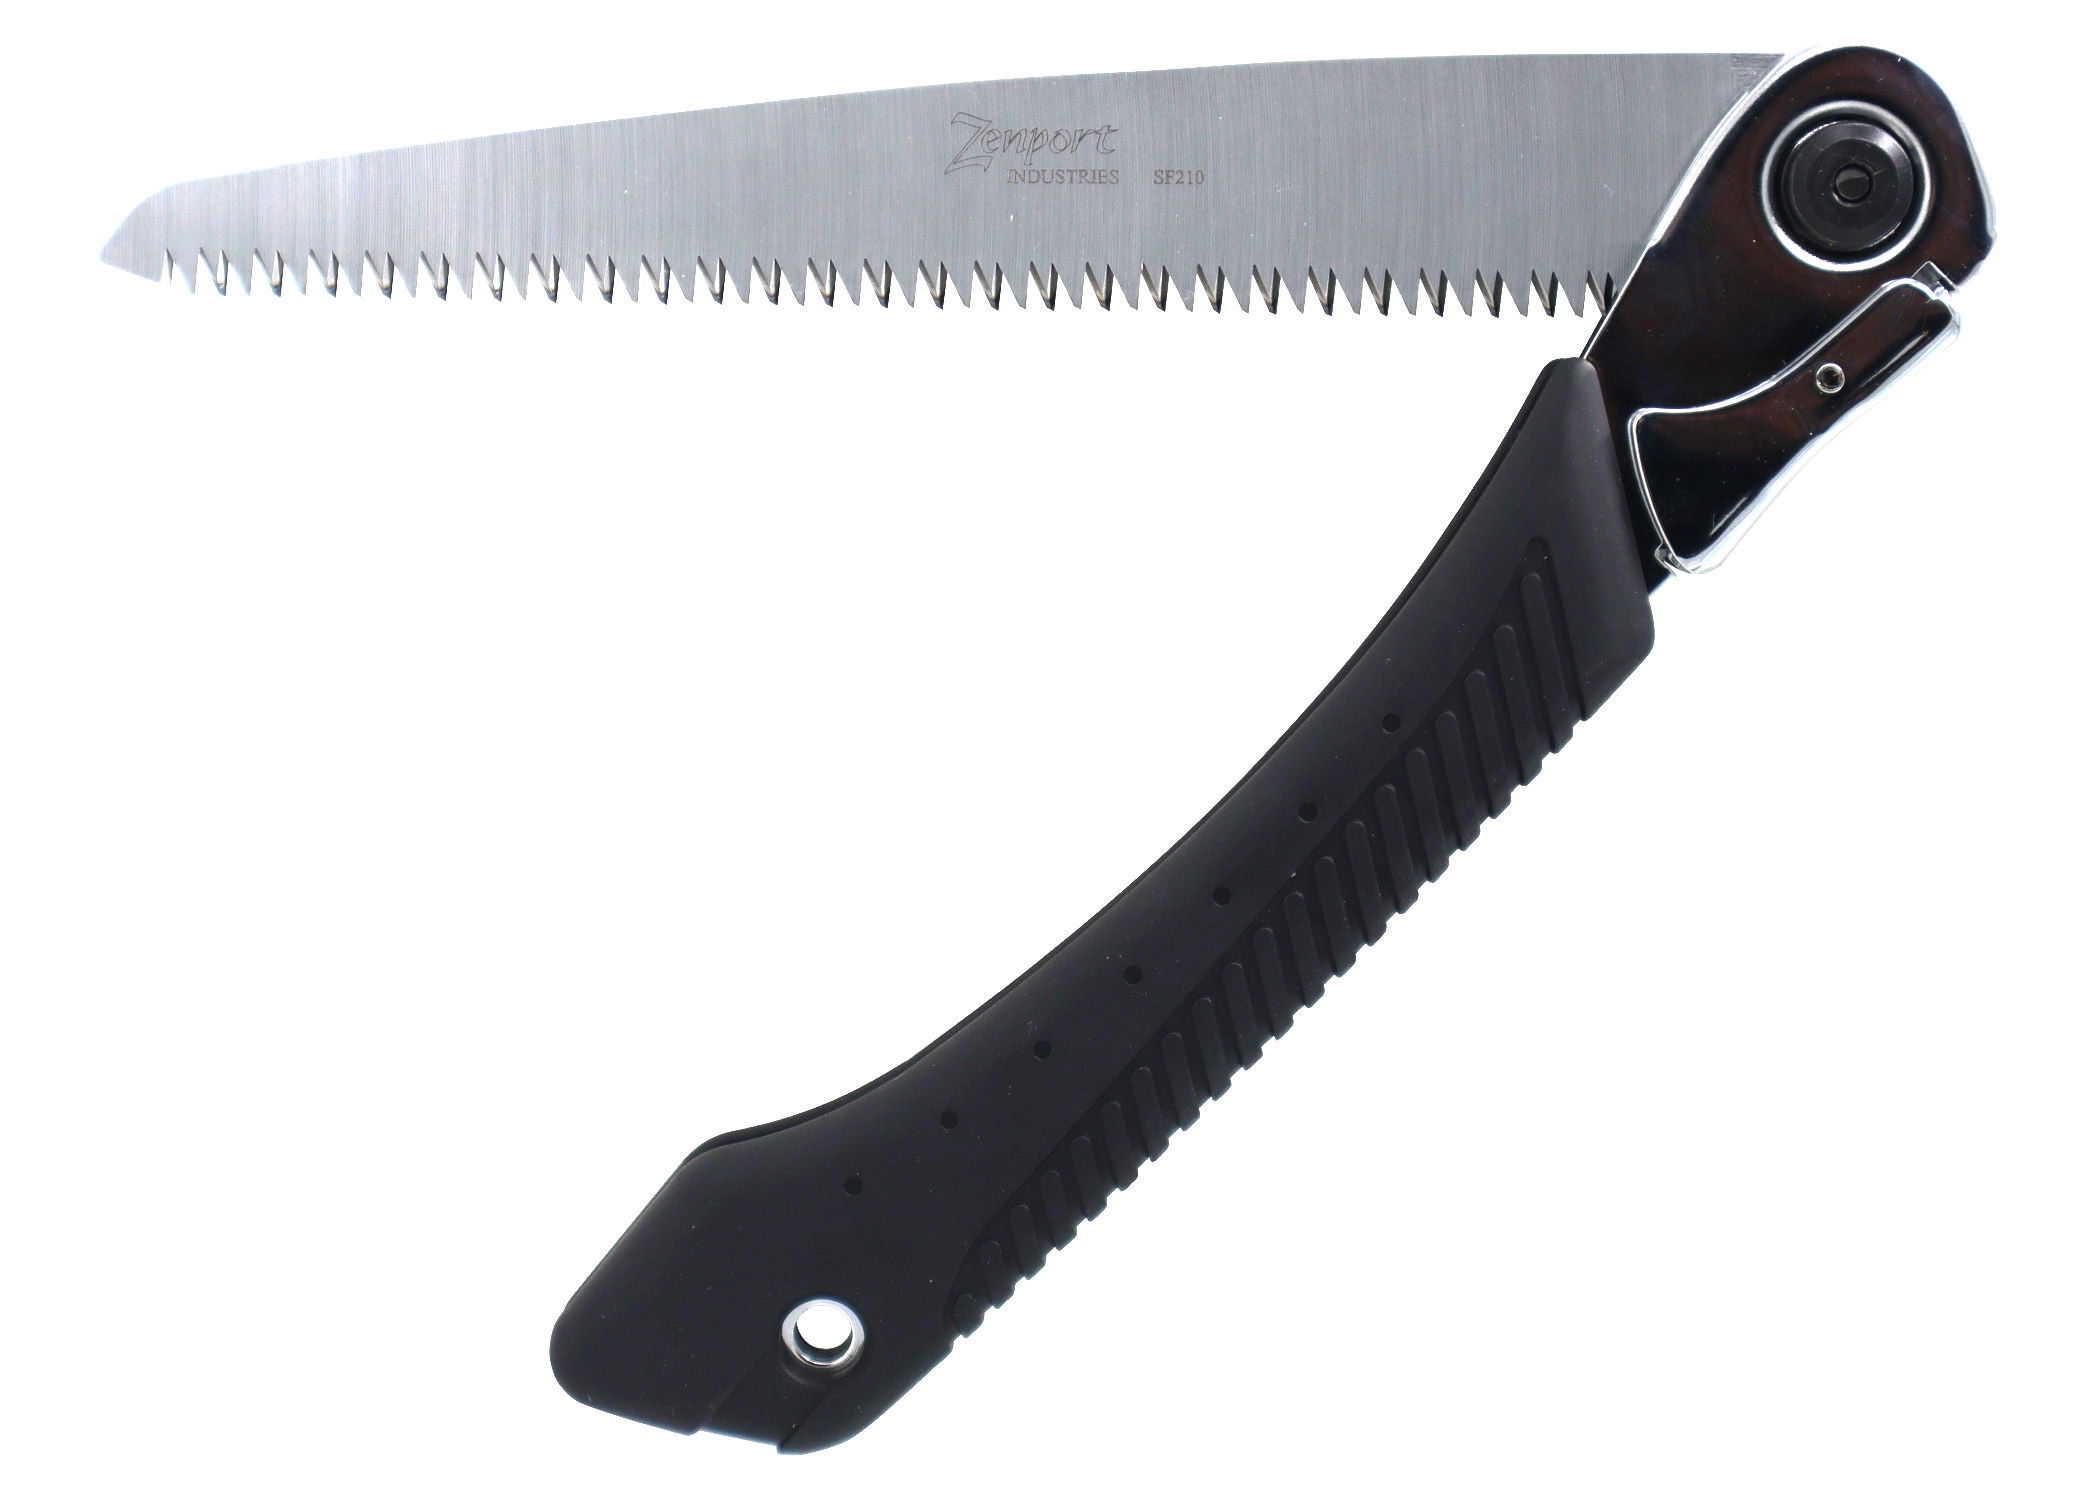 Zenport Saw SF210 8.5 inch Folding Saw, Tri-Edge Blade, Steel Handle